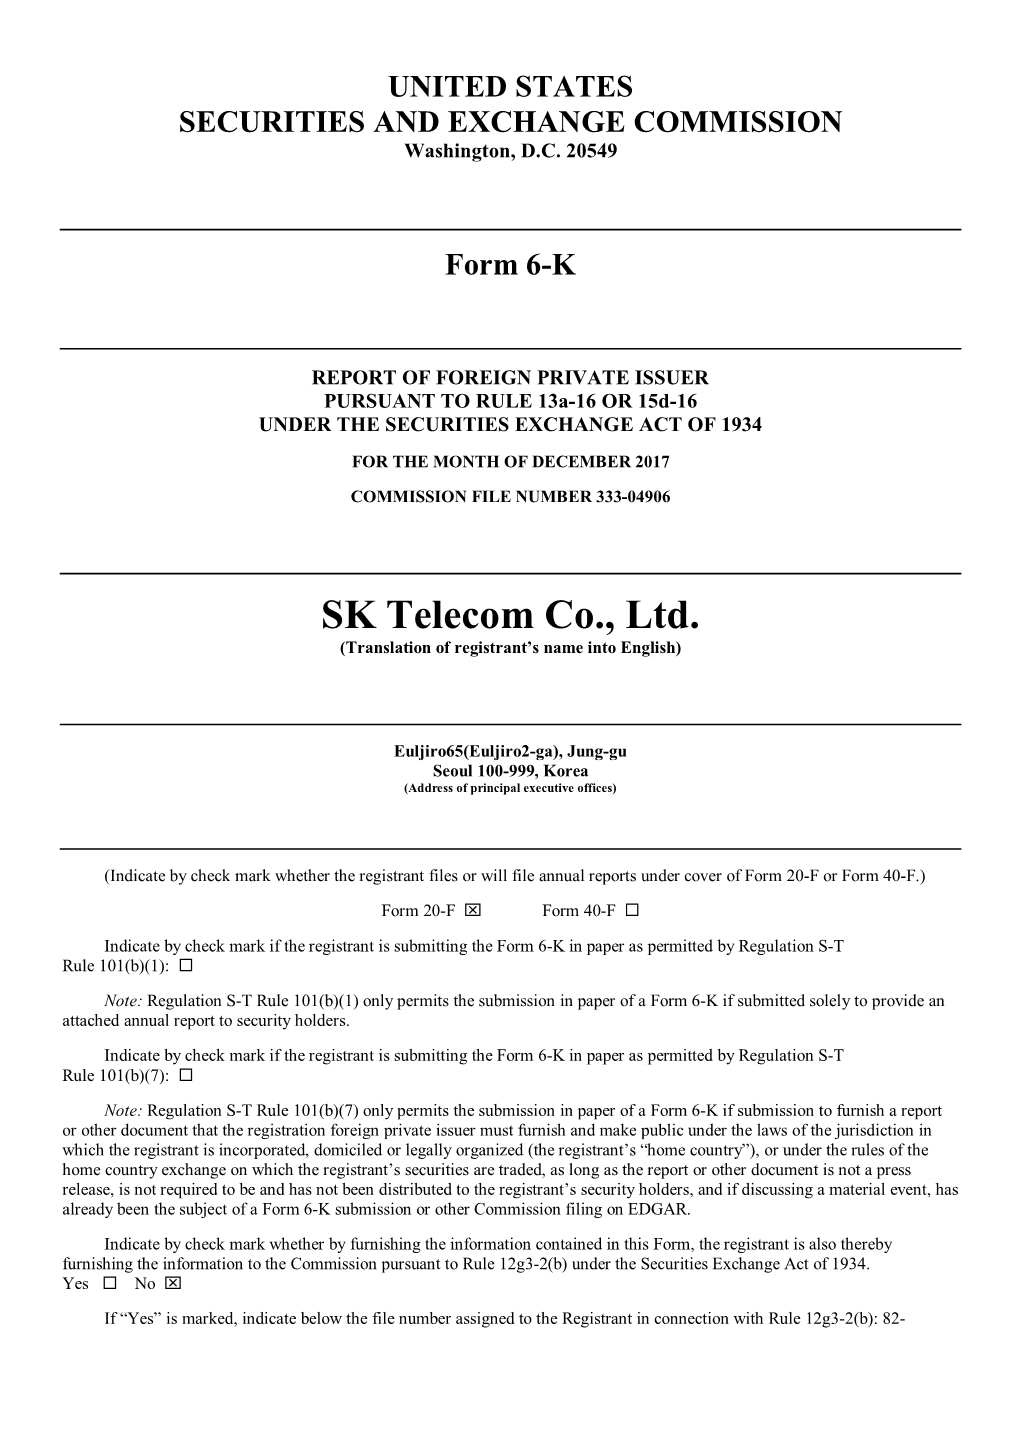 SK Telecom Co., Ltd. (Translation of Registrant’S Name Into English)